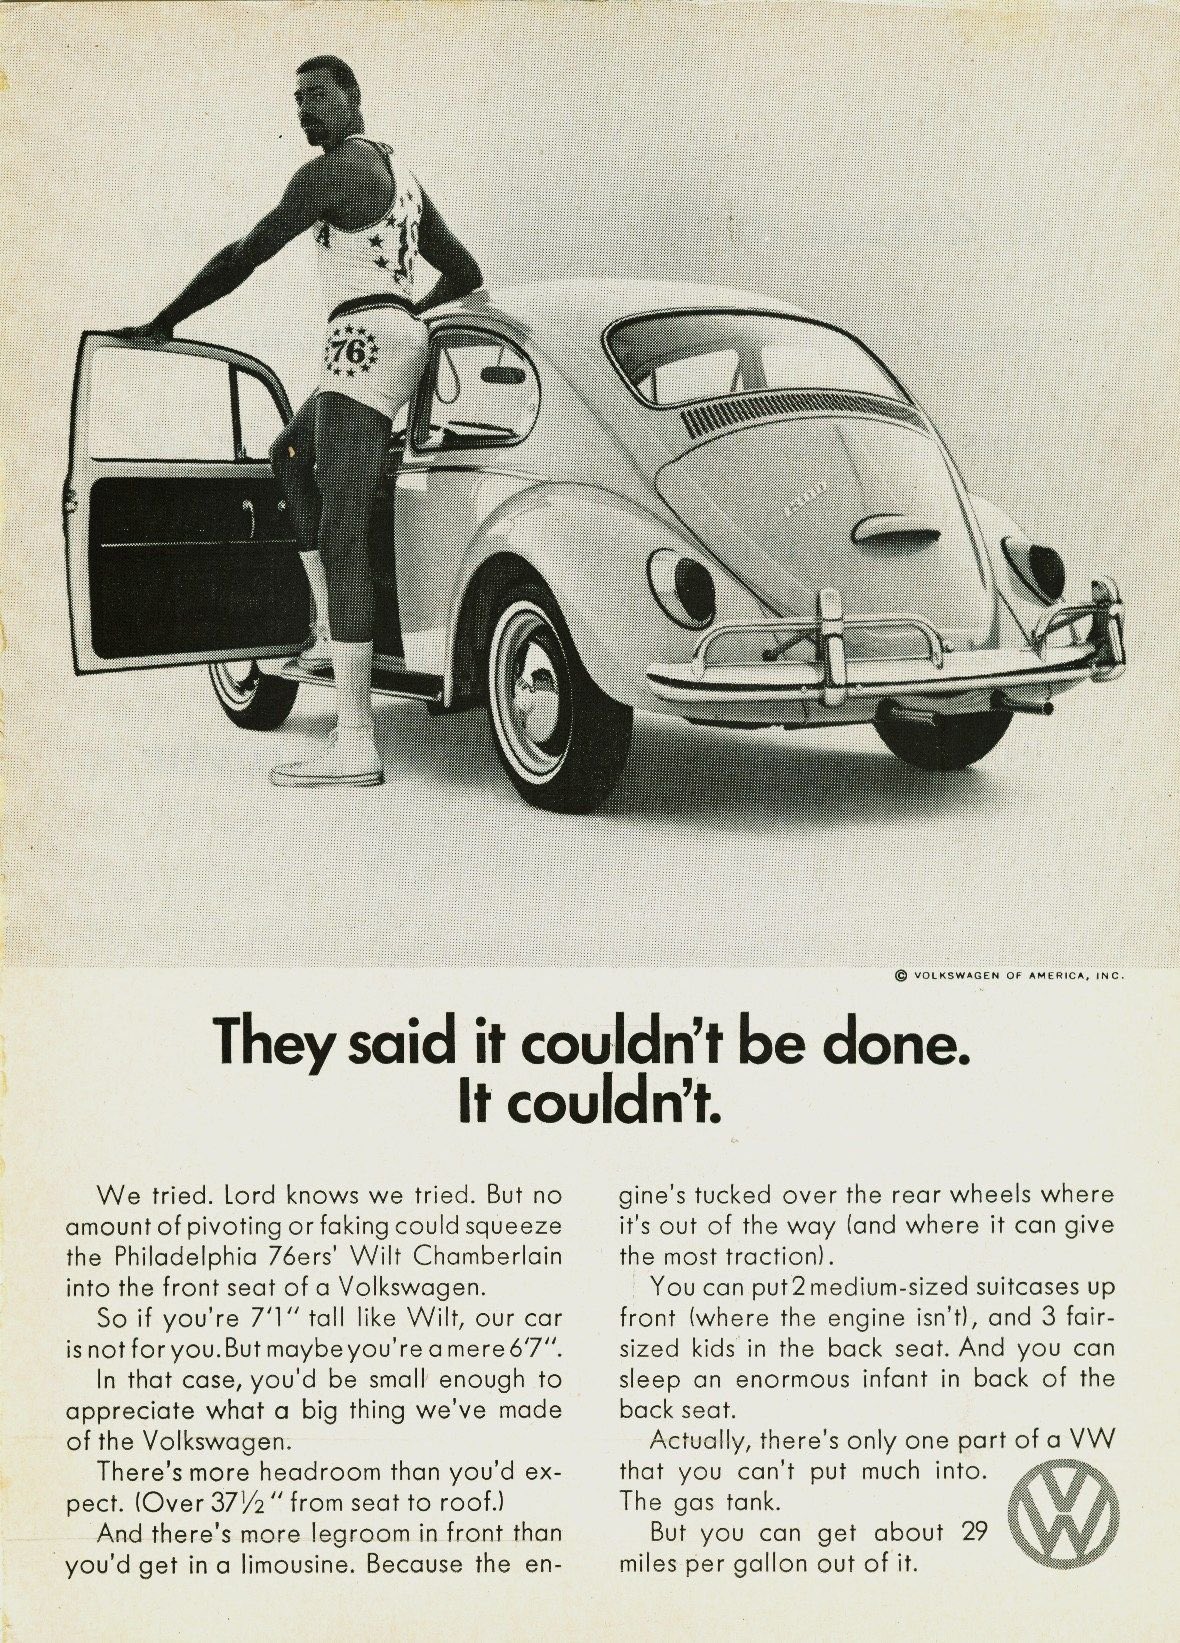 Best Of All Time on Twitter: "Volkswagen, 1966 https://t.co/NfxpzAdRme" / Twitter